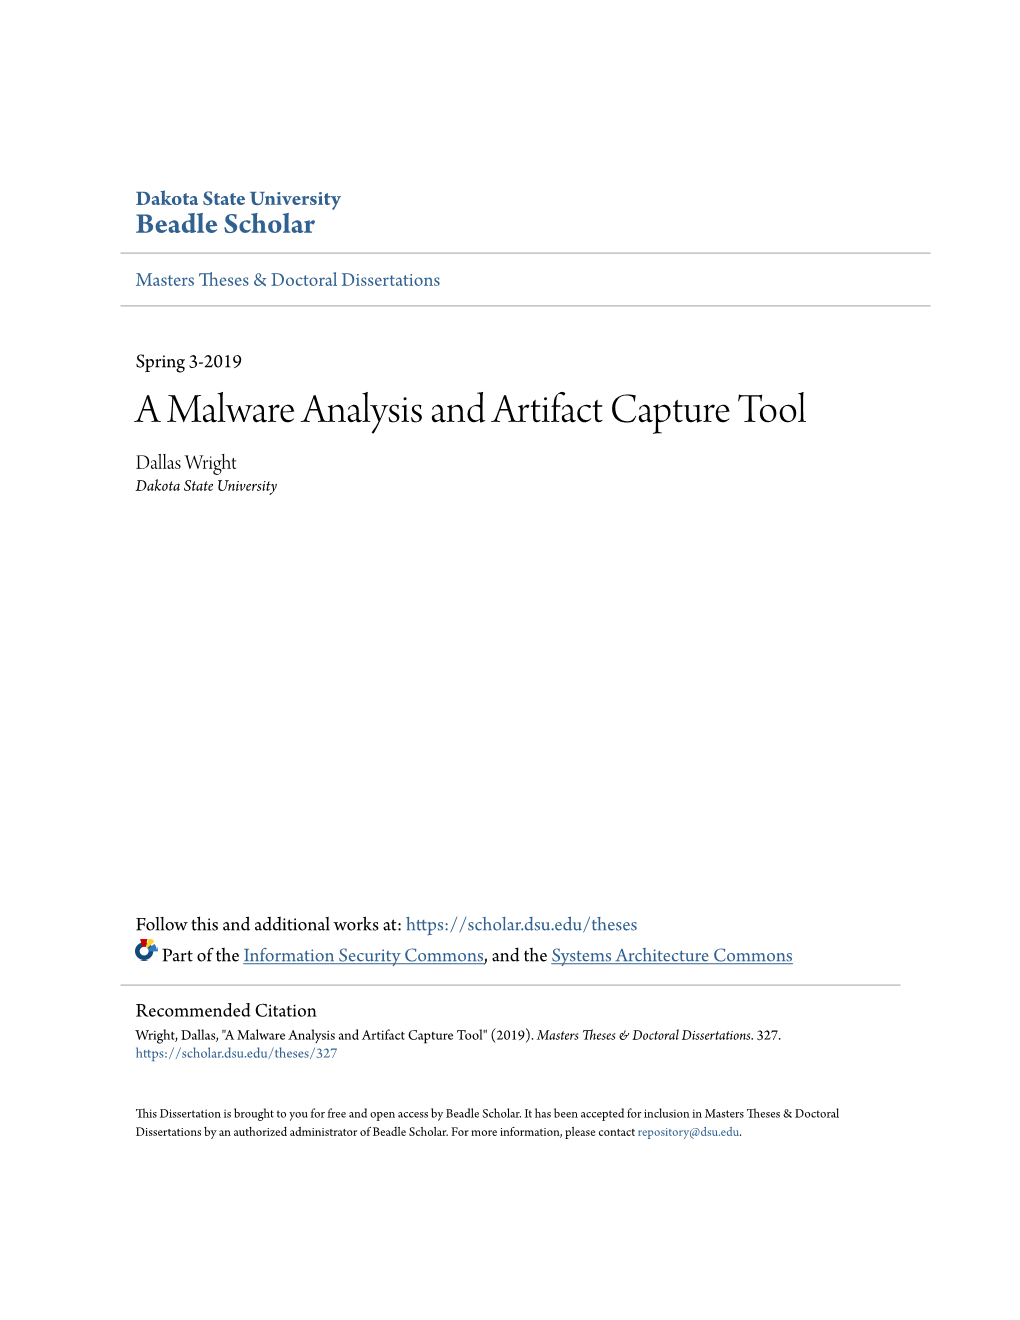 A Malware Analysis and Artifact Capture Tool Dallas Wright Dakota State University